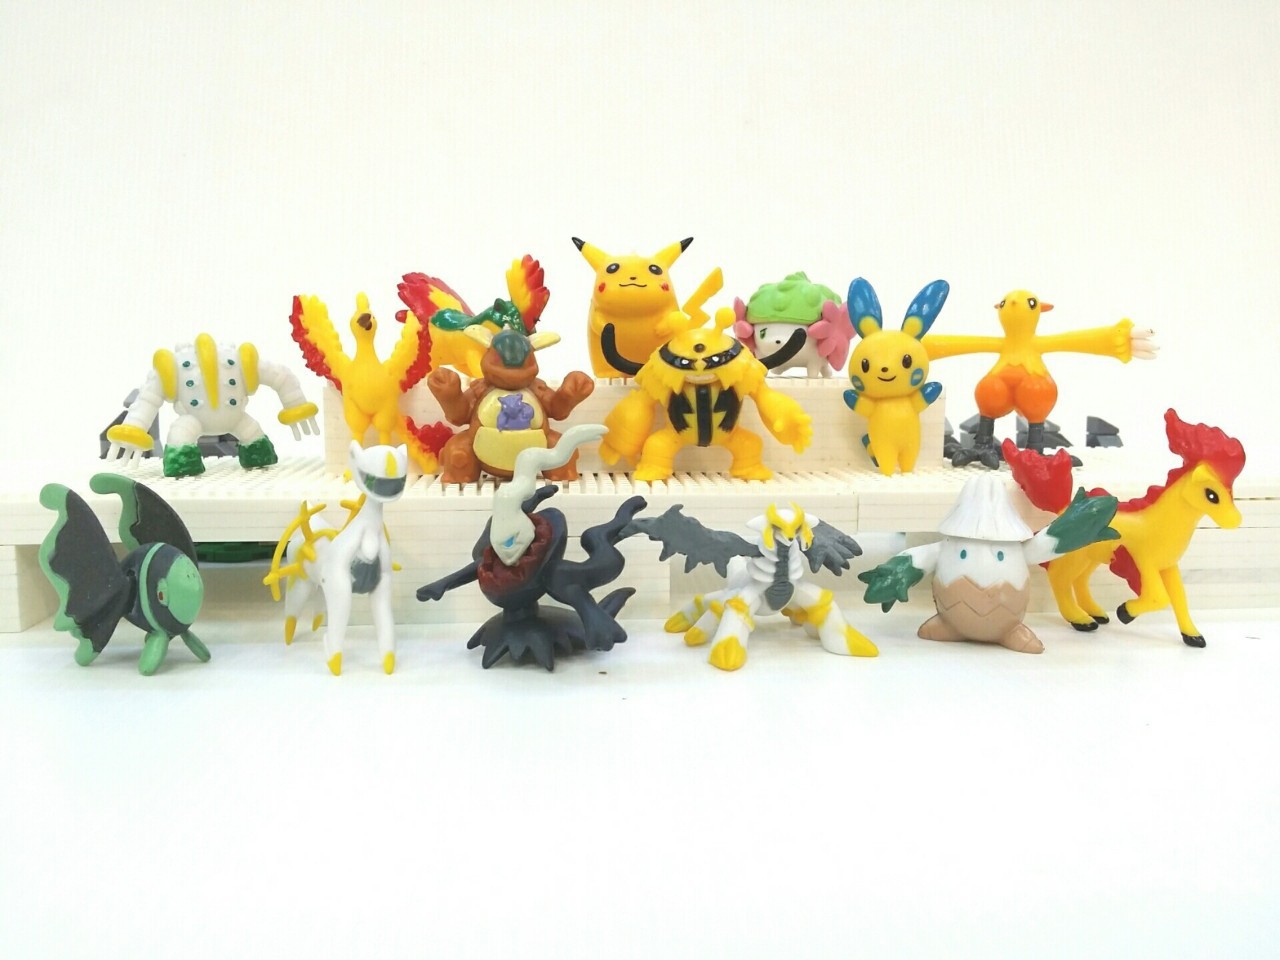 4 cm Action Figure Key Holder Pocket Monster Pokemon Pikachu Set 15 pcs Model โมเดล แอ๊คชั่น ฟิกเกอร์ โปเกมอน